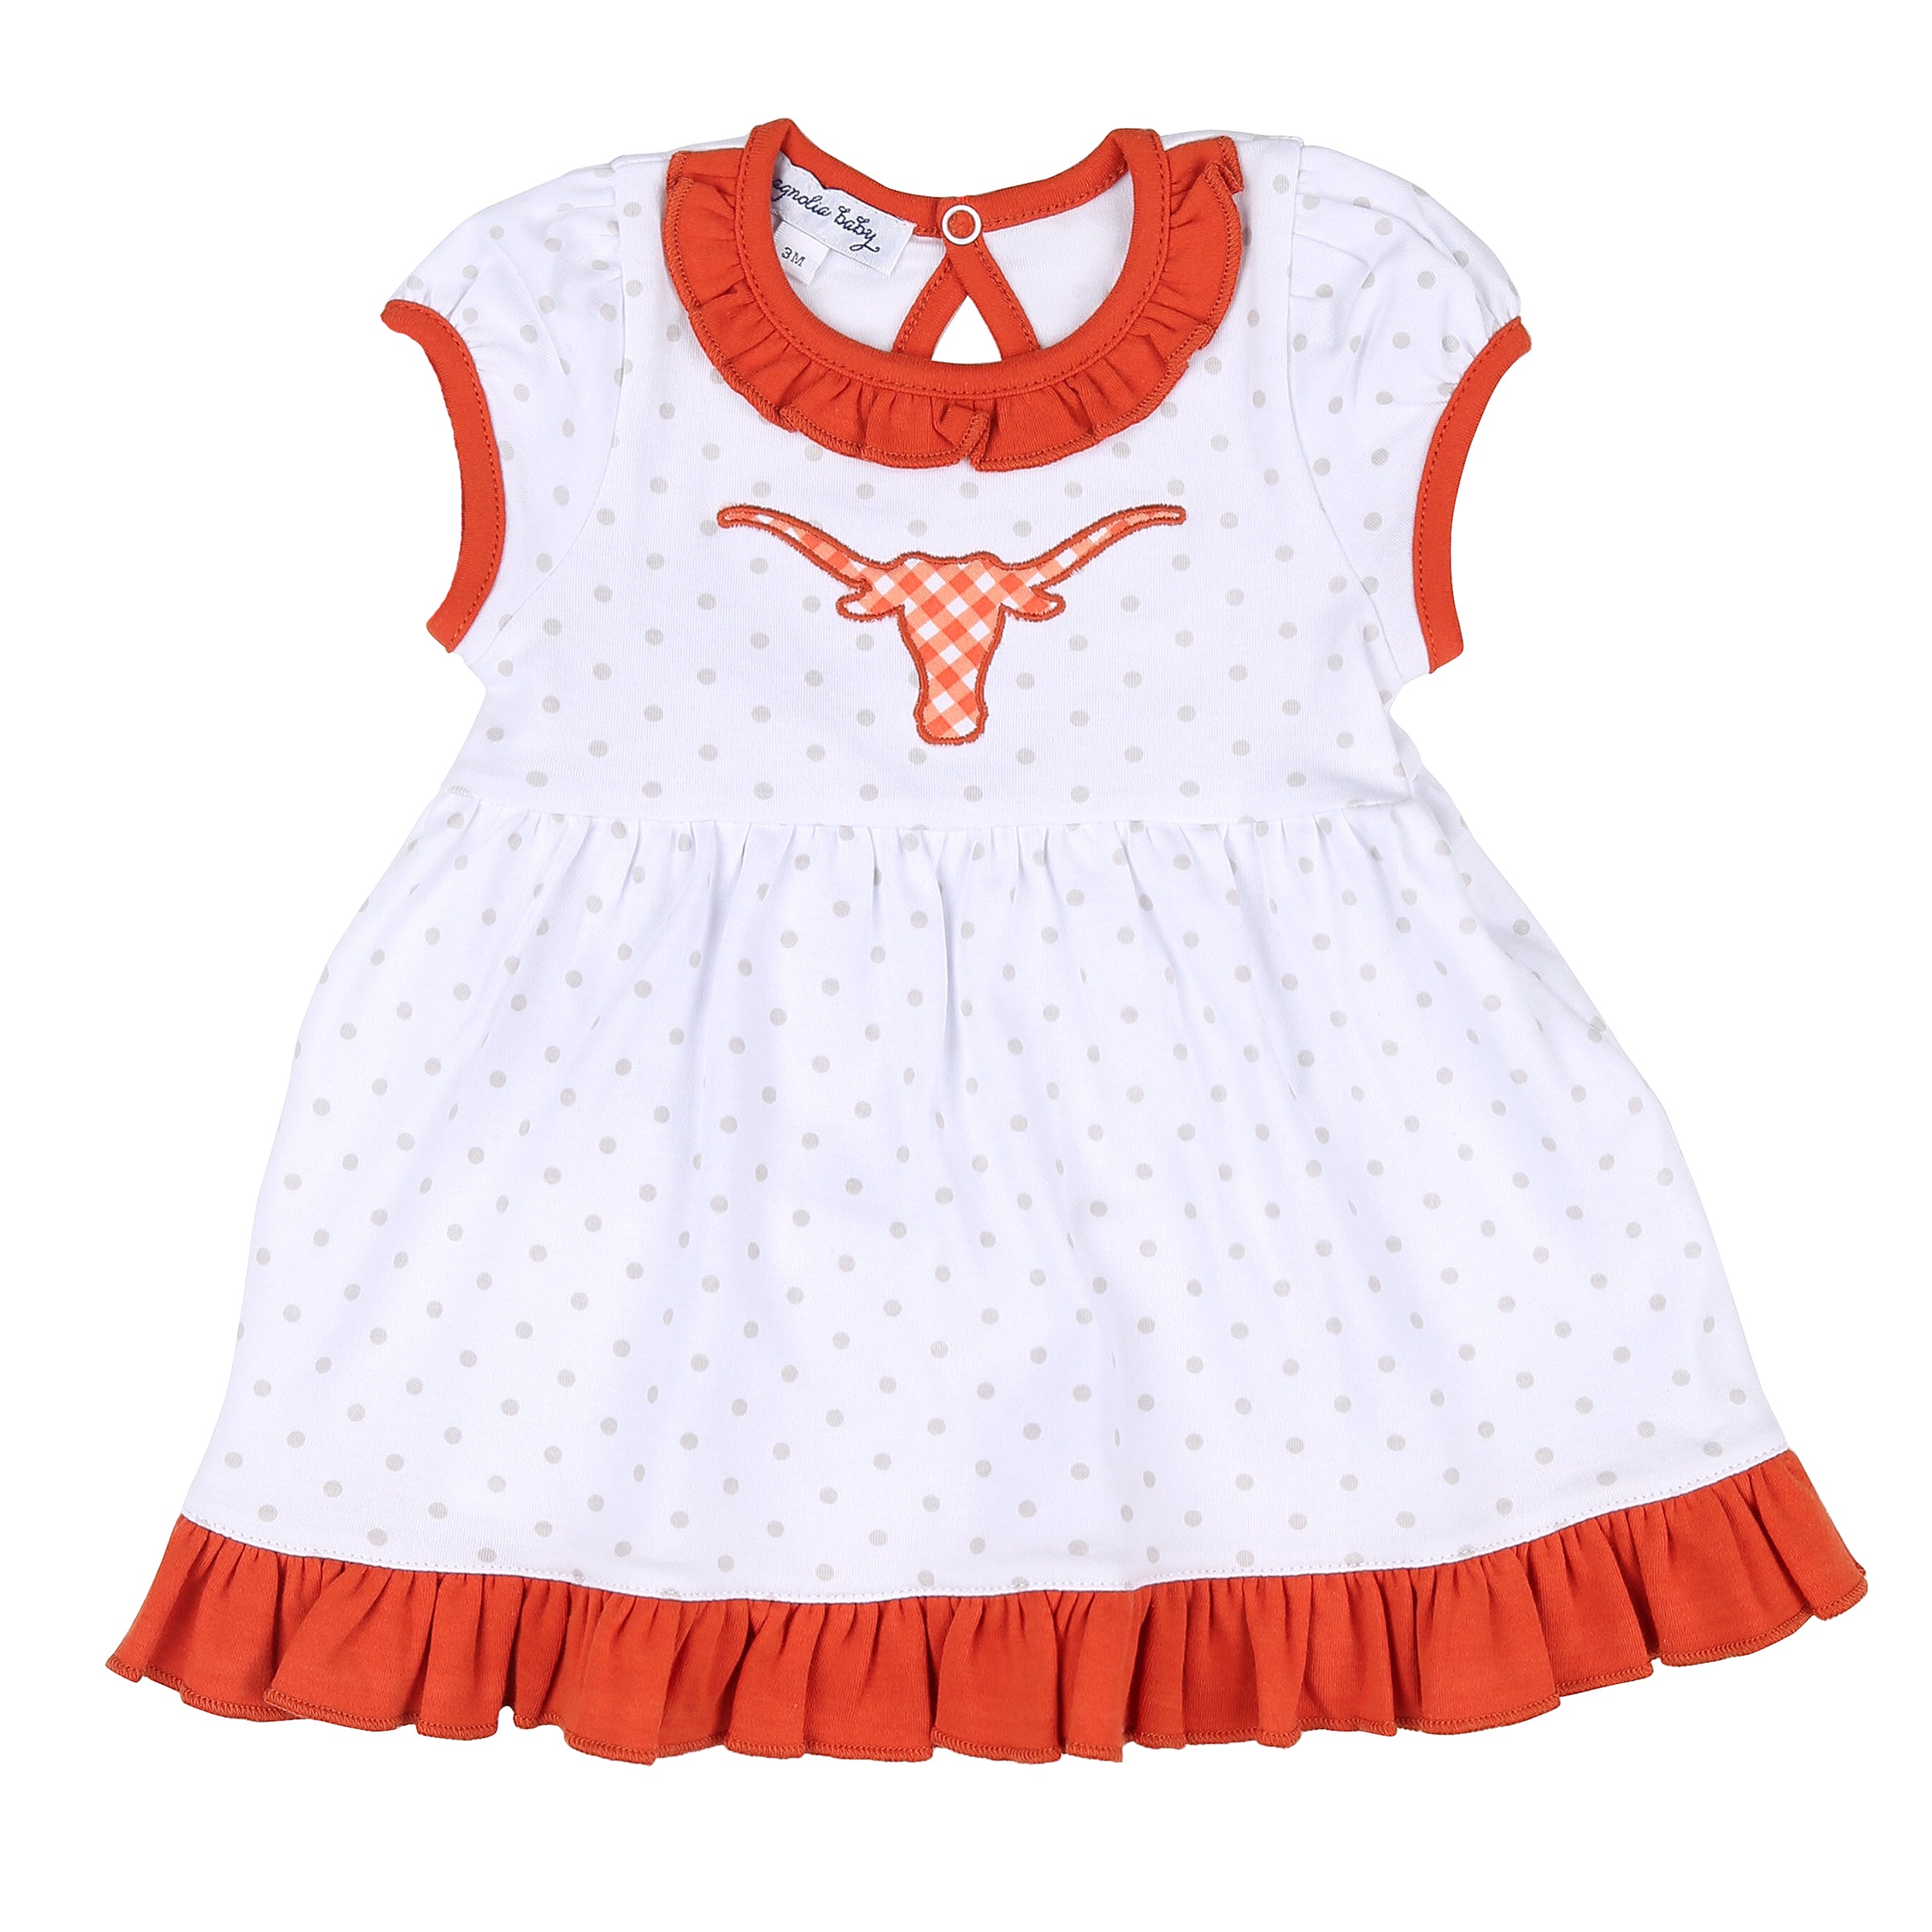 Gingham Longhorn Toddler Dress